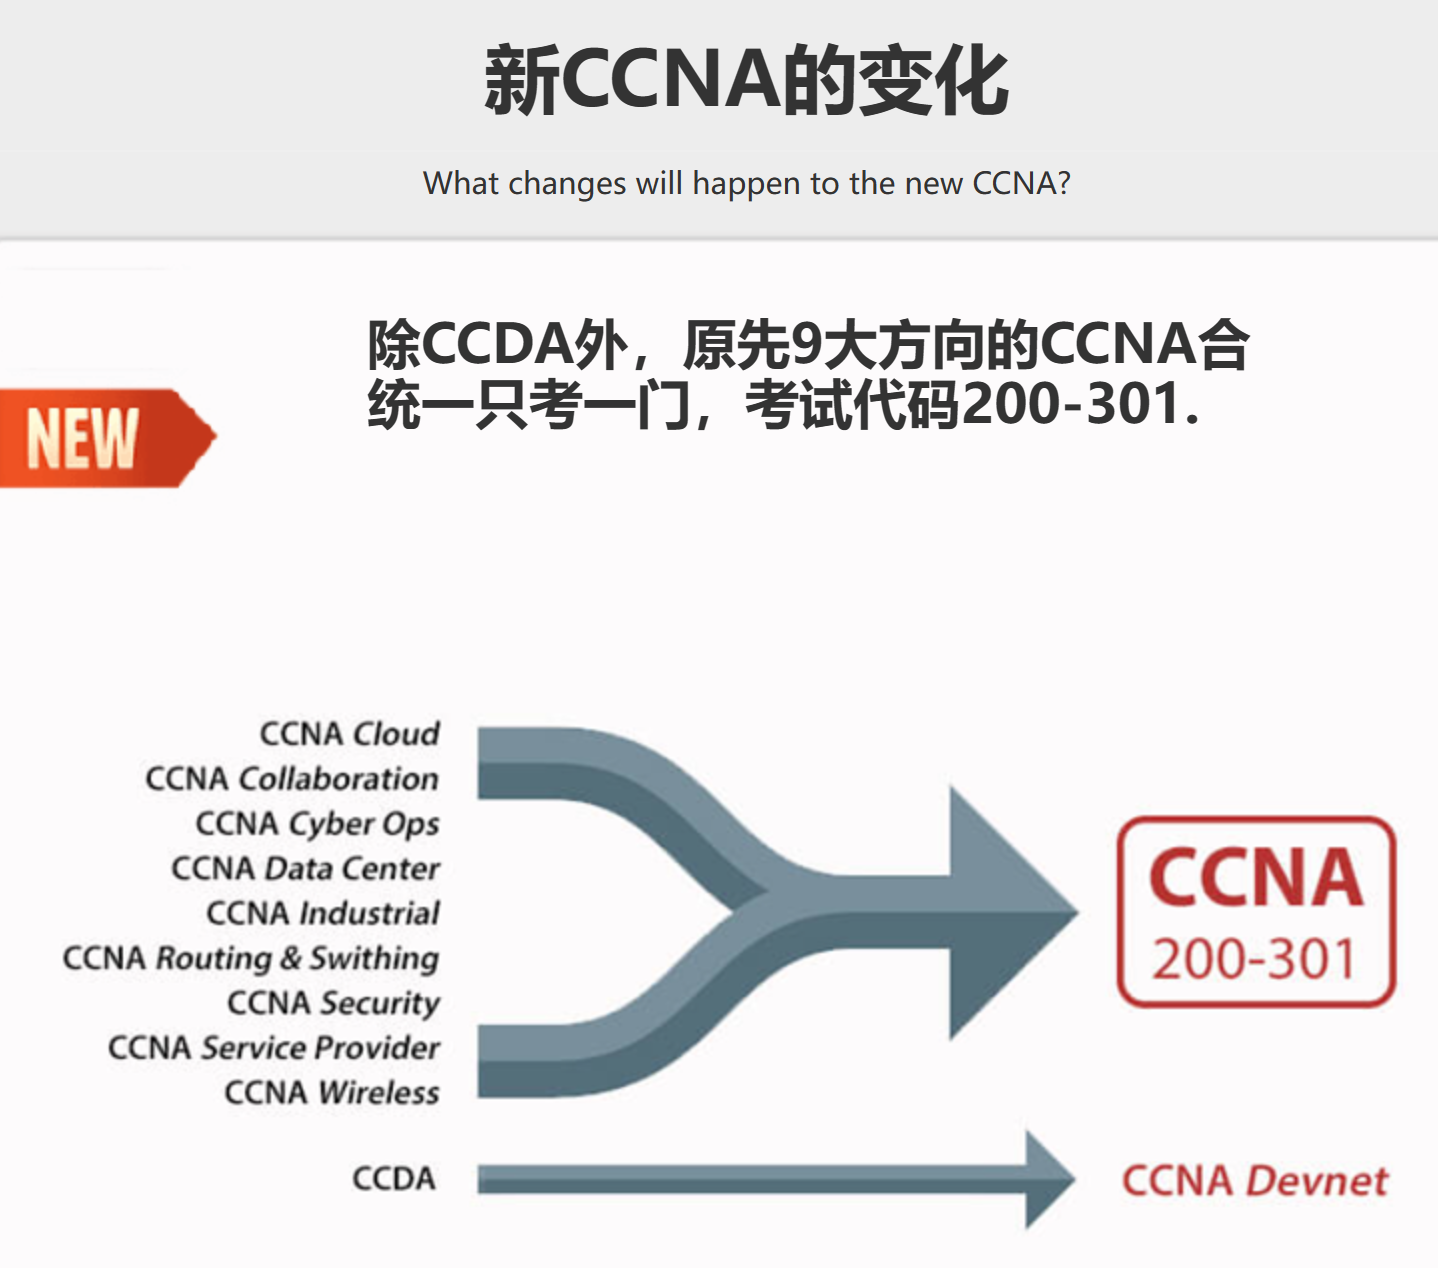 CCNA EI 思科认证网络助理工程师